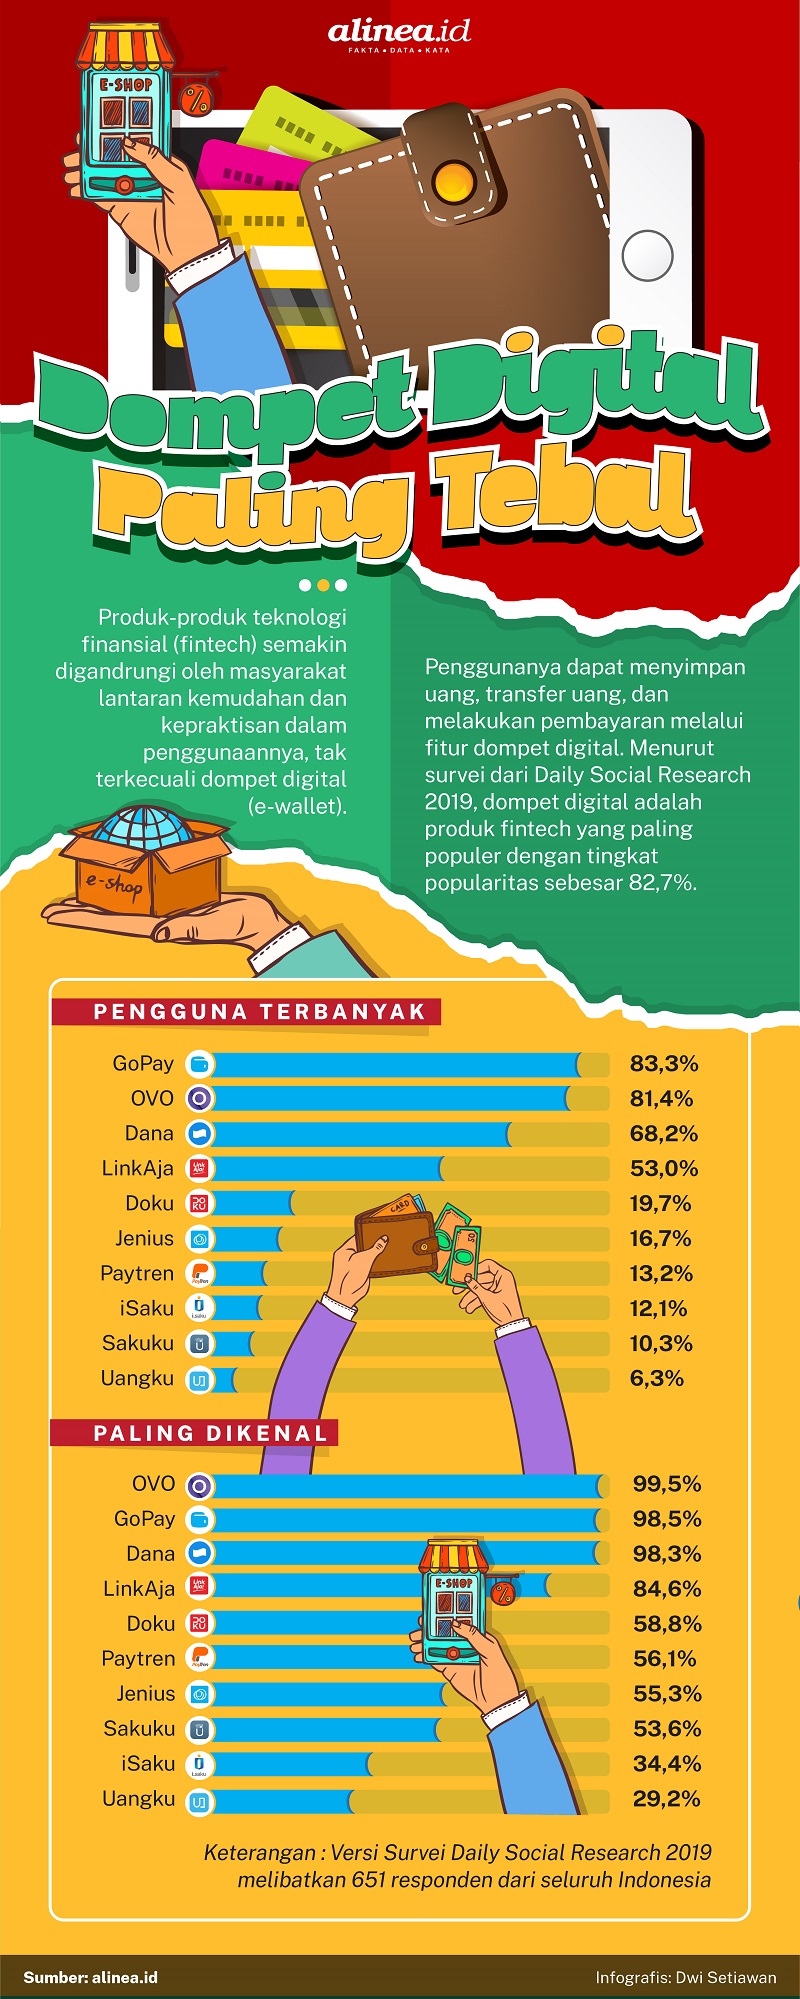 Infografik perang dompet digital di Indonesia. Alinea.id/Dwi Setiawan